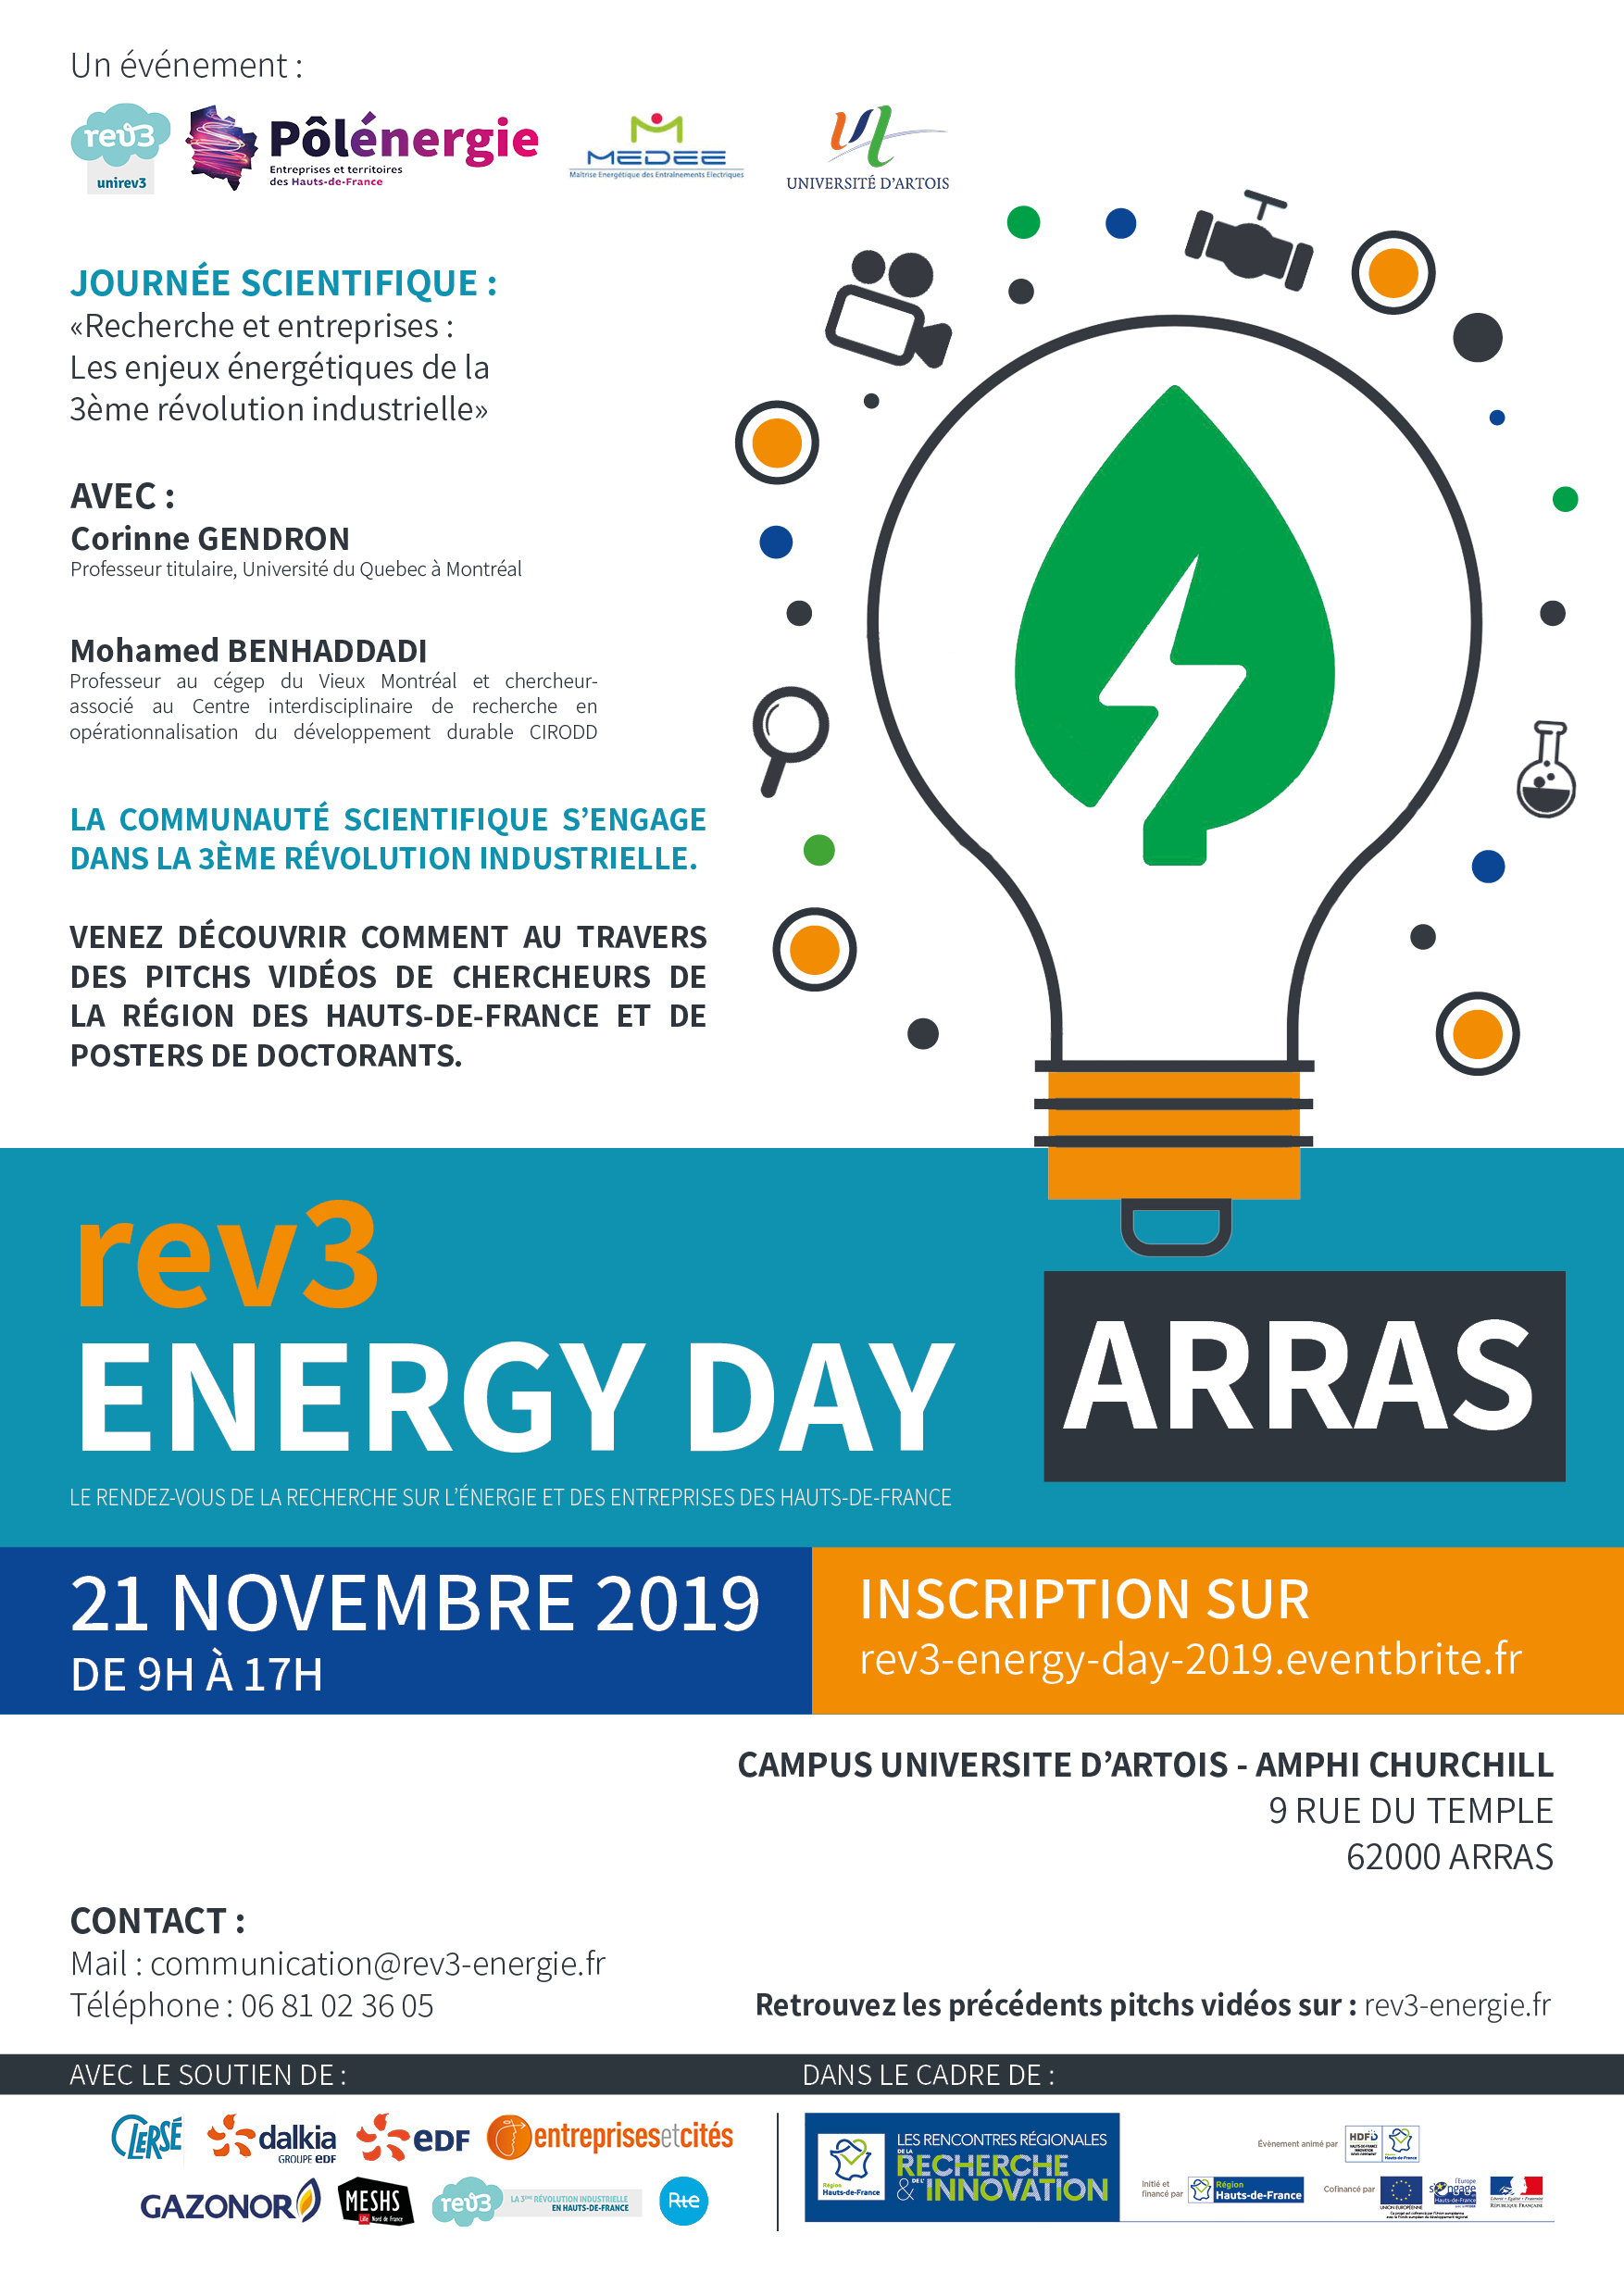 Rev3 Energy Day